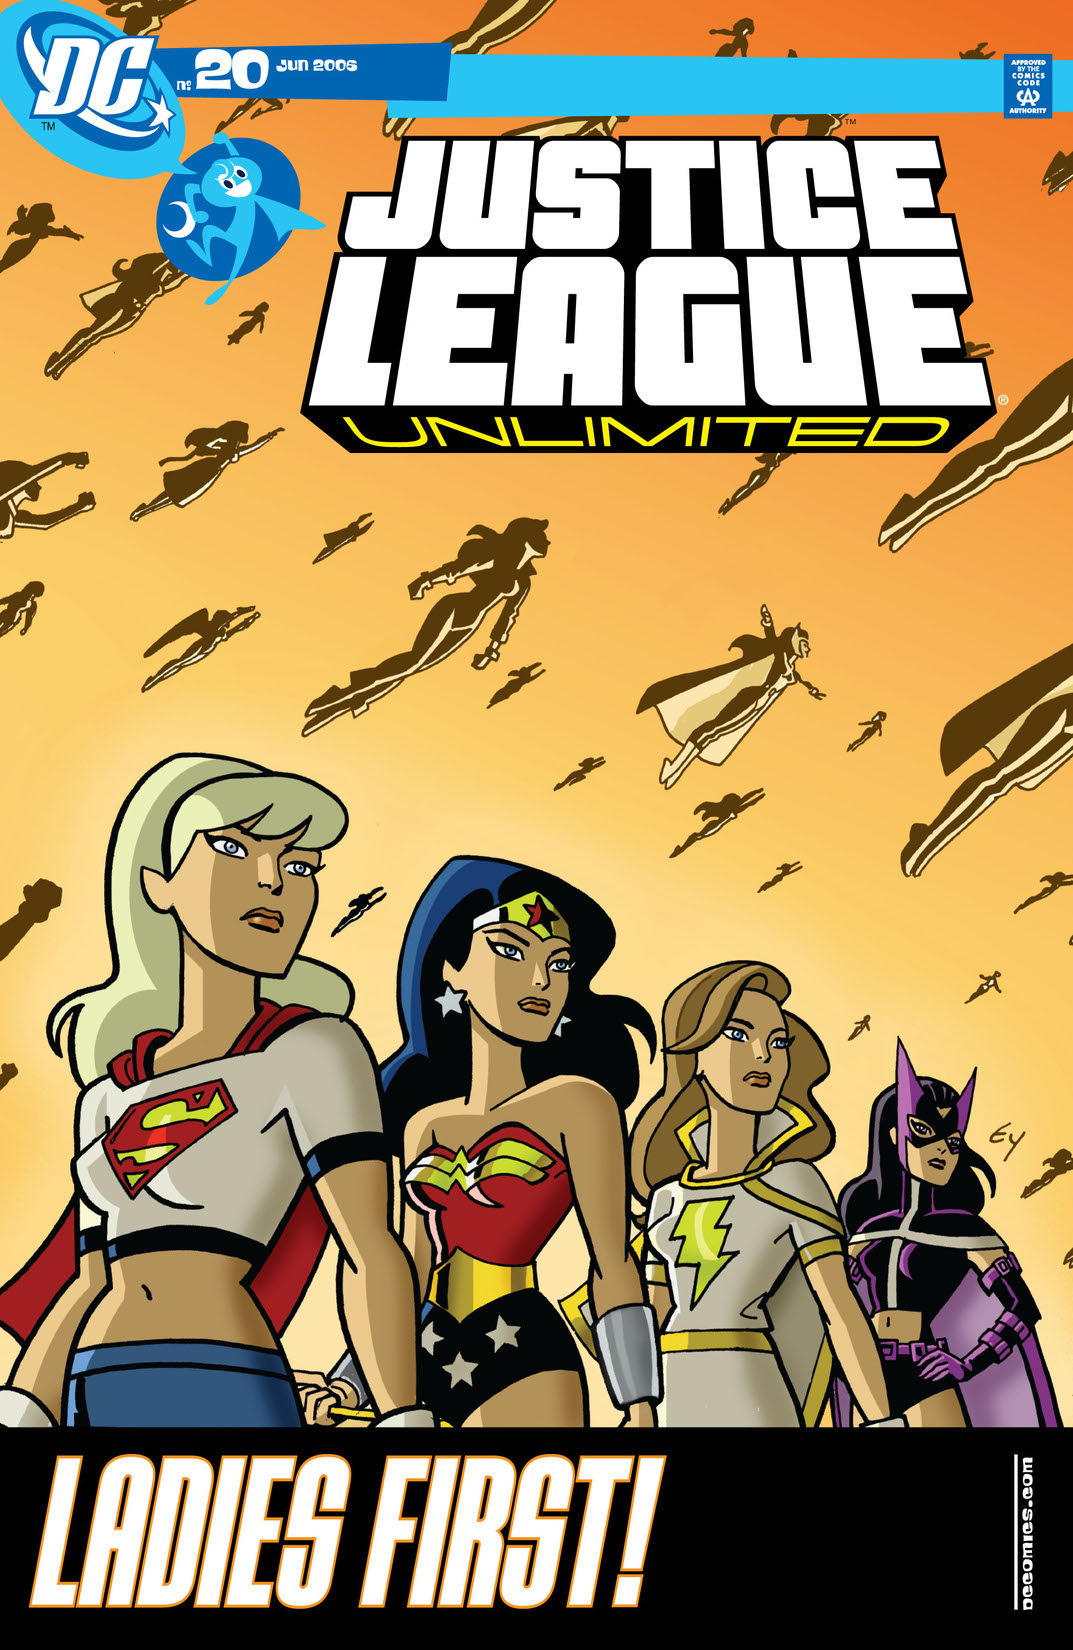 Justice League Unlimited #20 preview images